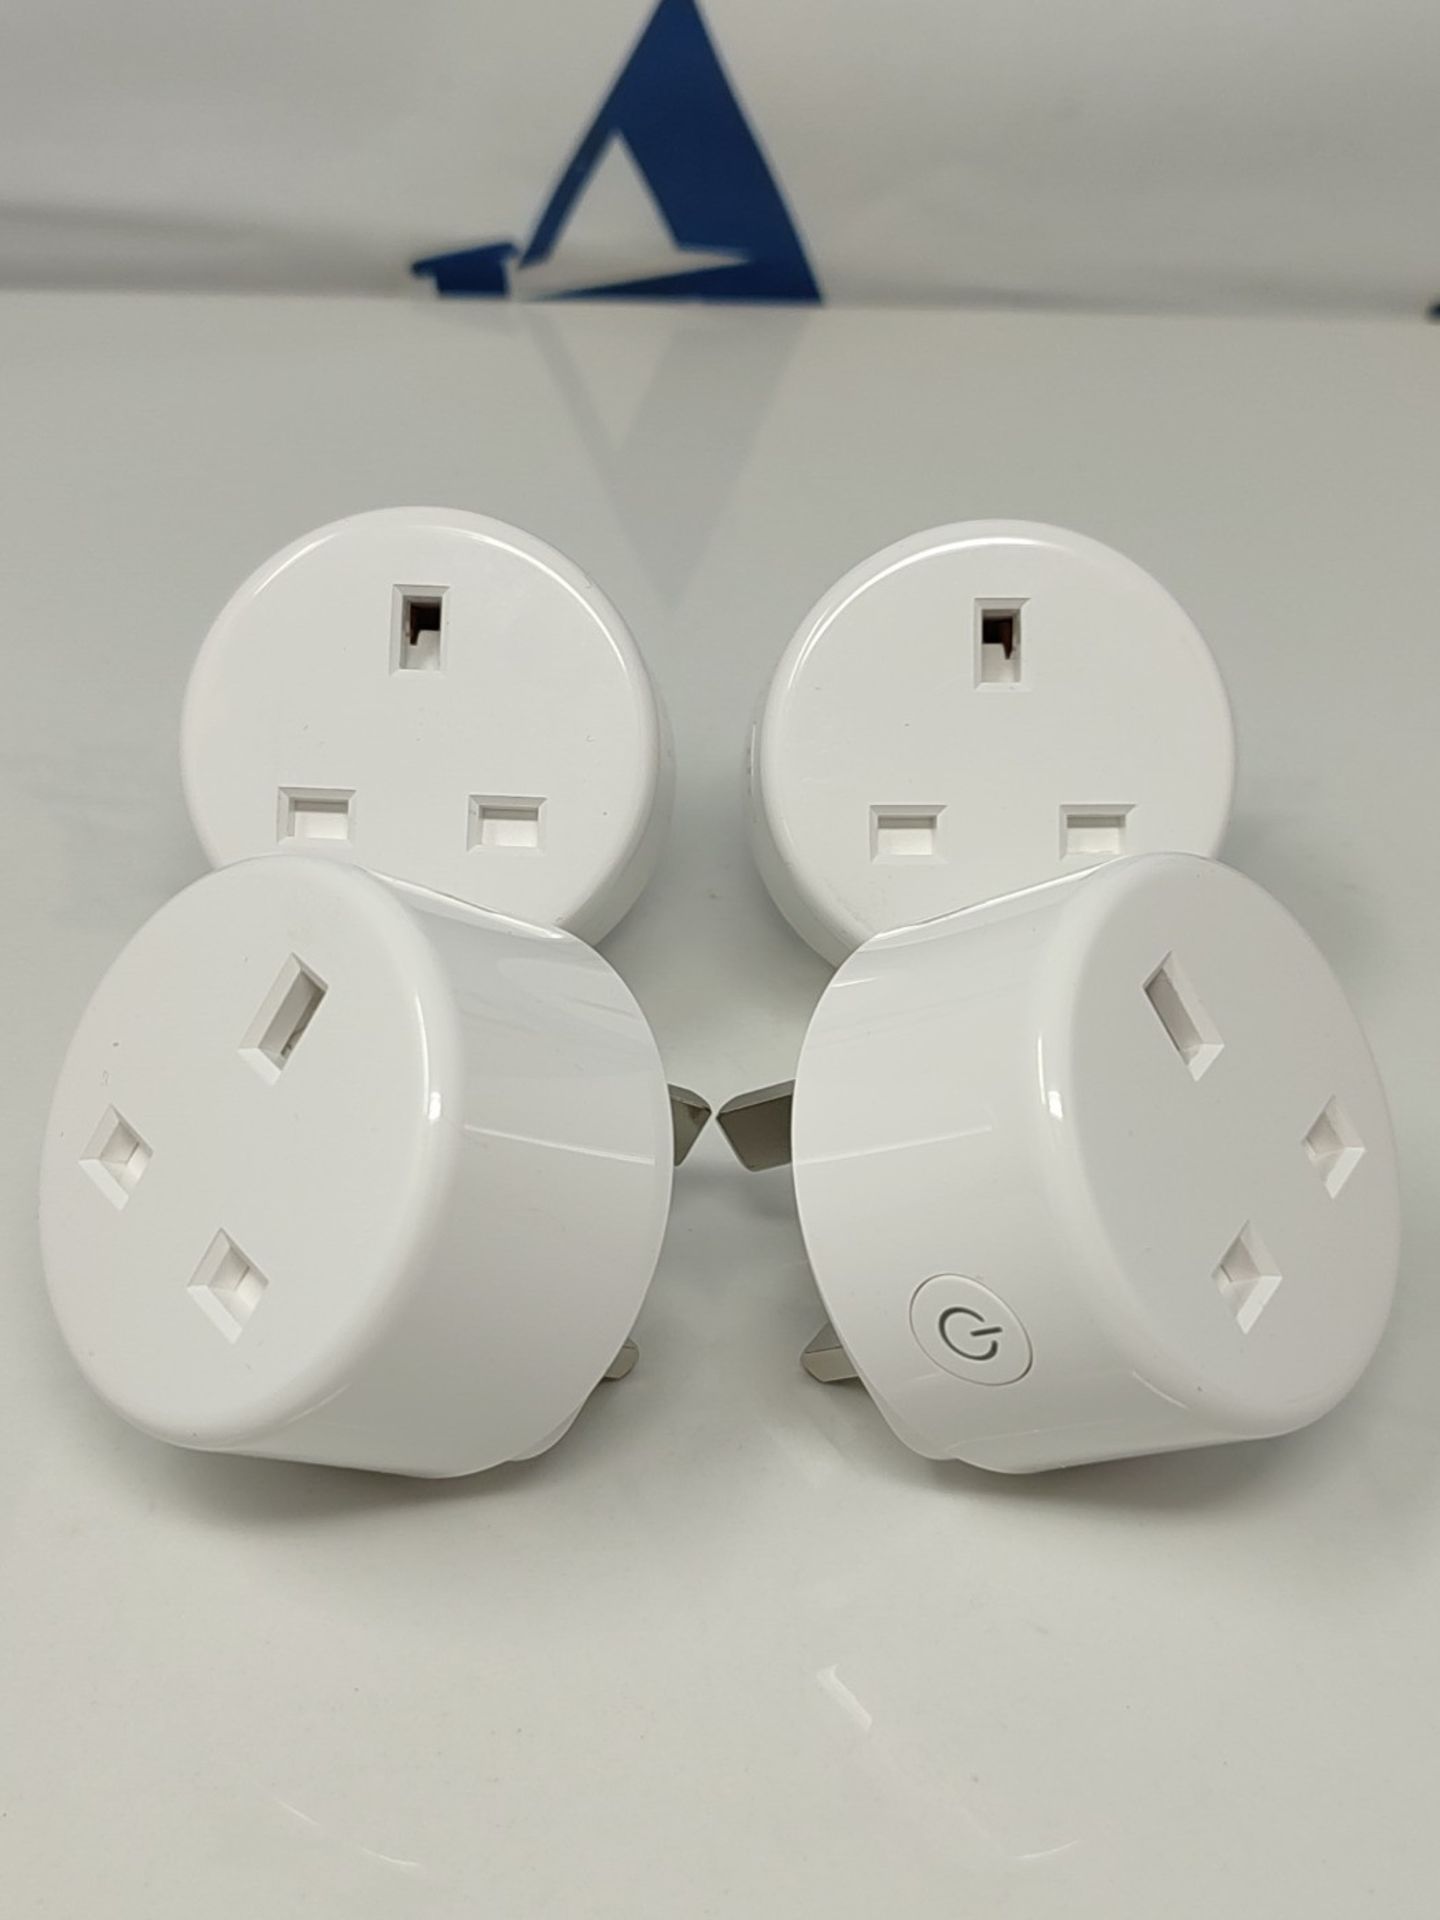 OHMAX Smart Plug, Energy Monitoring Smart Wifi Plug Compatible with Alexa, Google Home - Image 2 of 2